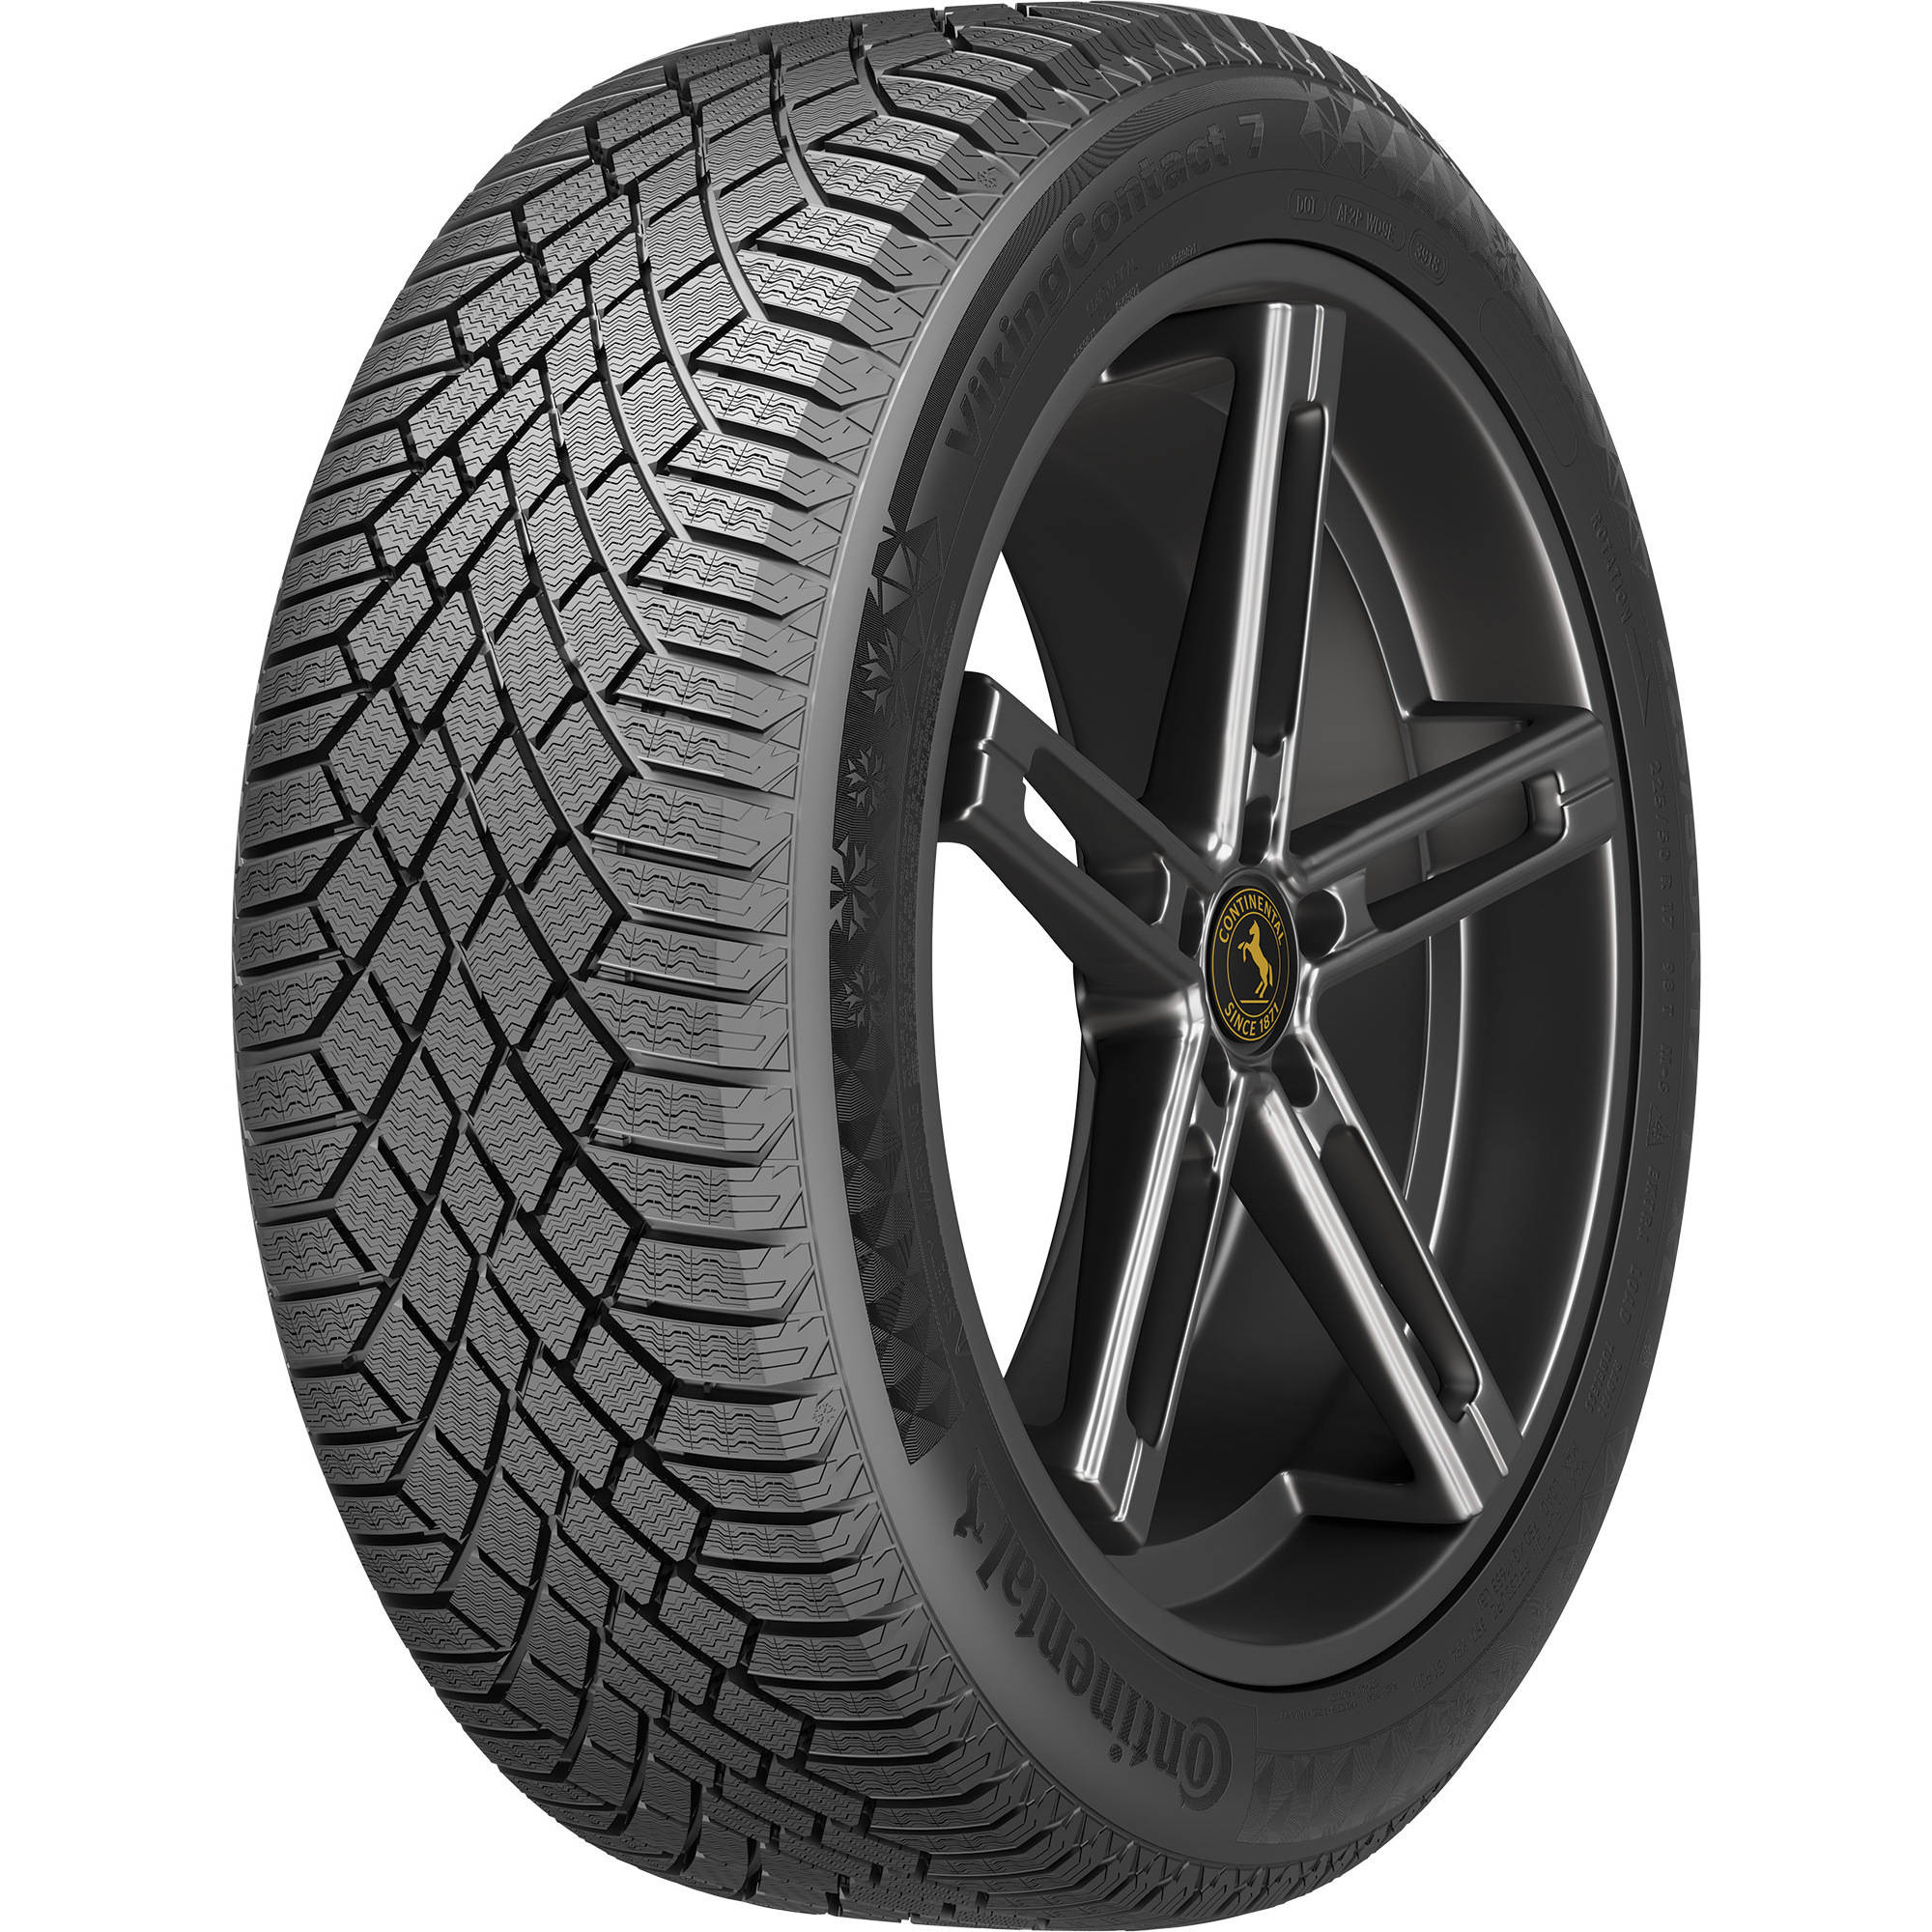 CONTINENTAL VIKING CONTACT 7 275/55R20XL (31.9X10.8R 20) Tires